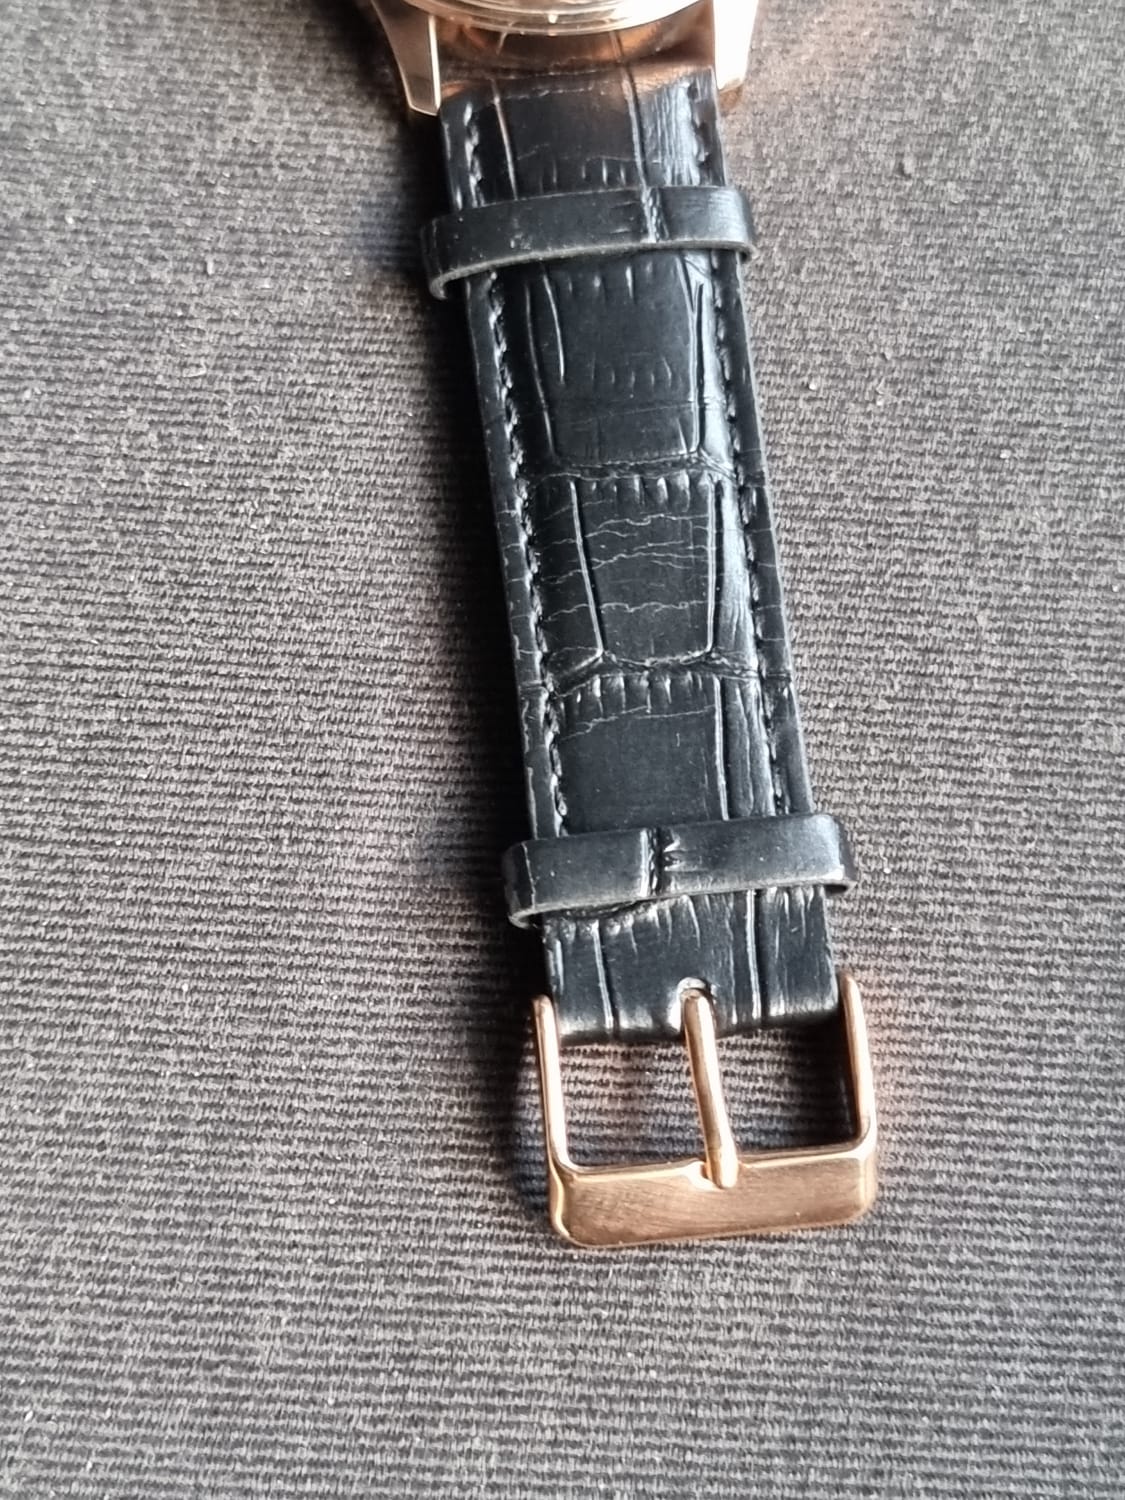 Lorus Sub Brand Of Seiko Gents Watch Black leather Strap